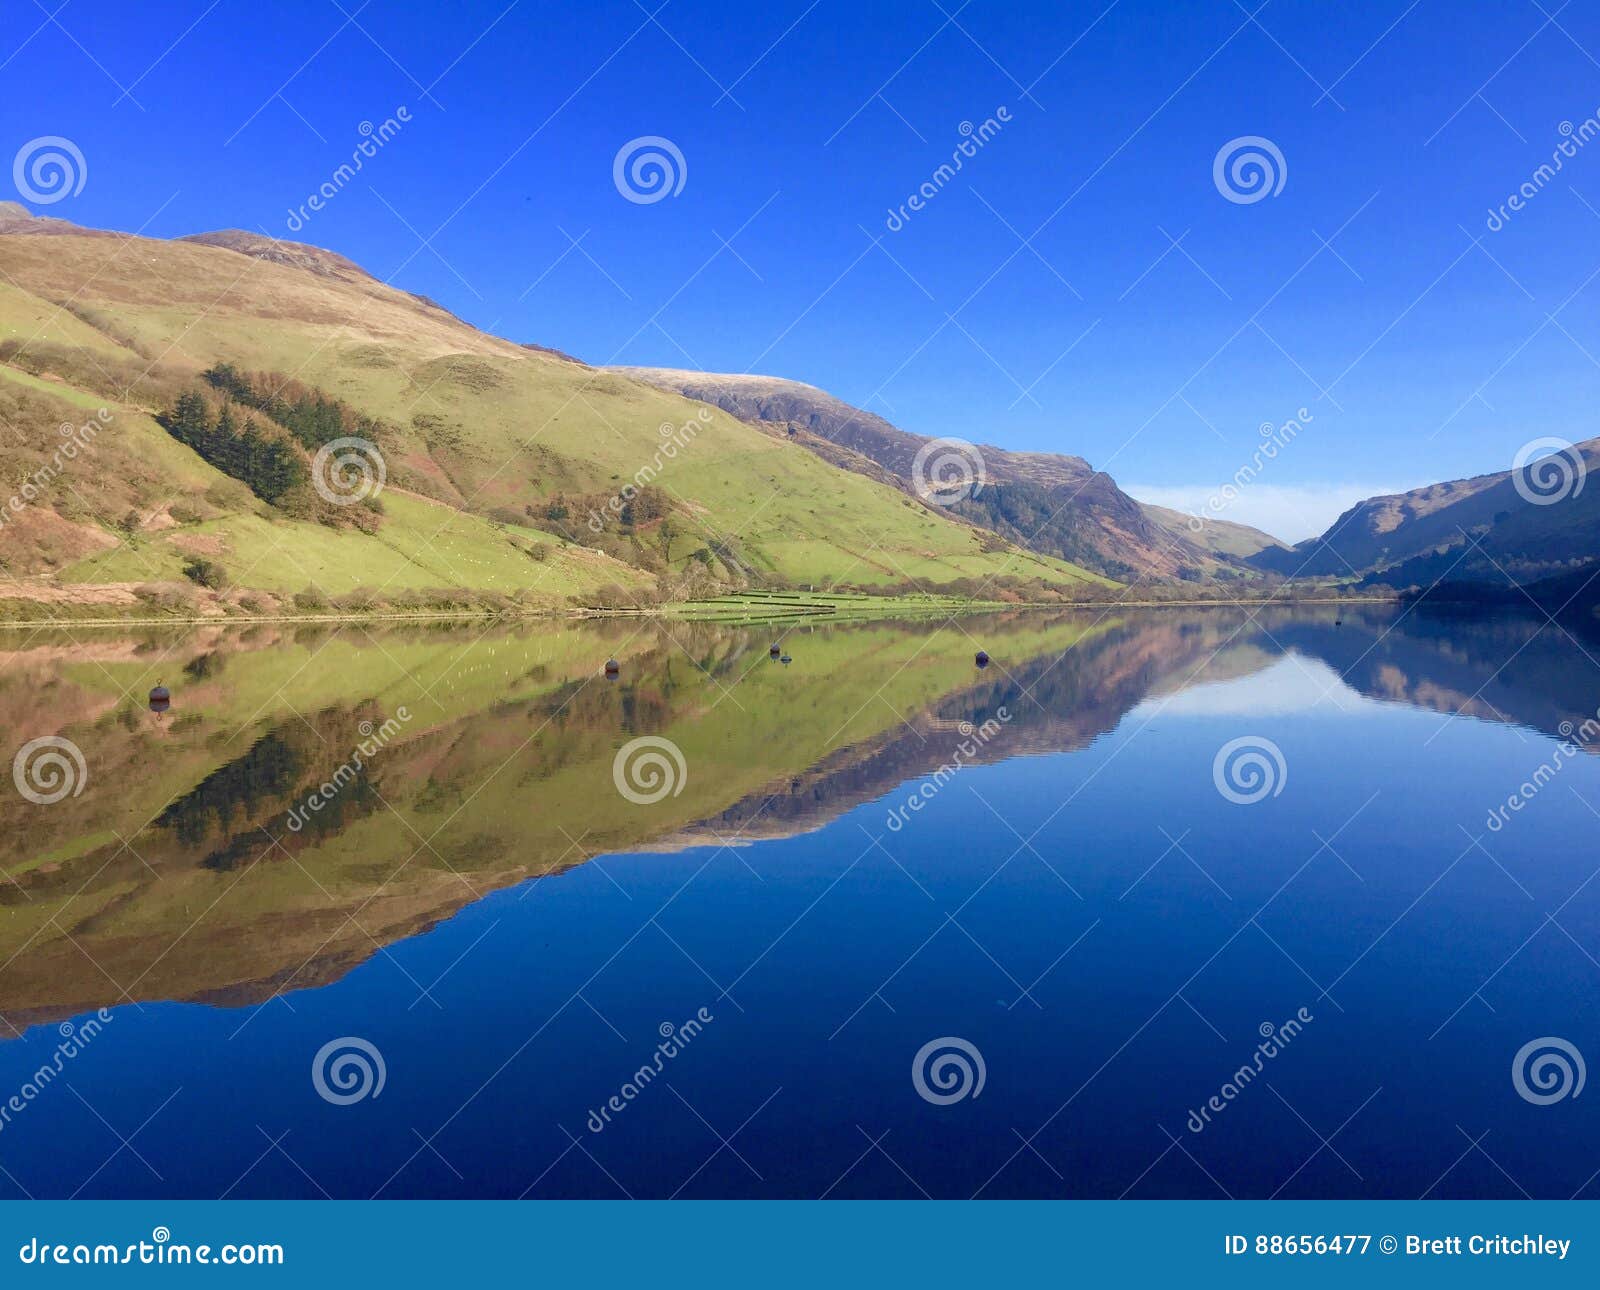 Sunny Welsh lake Wales stock image. Image of reflections - 88656477